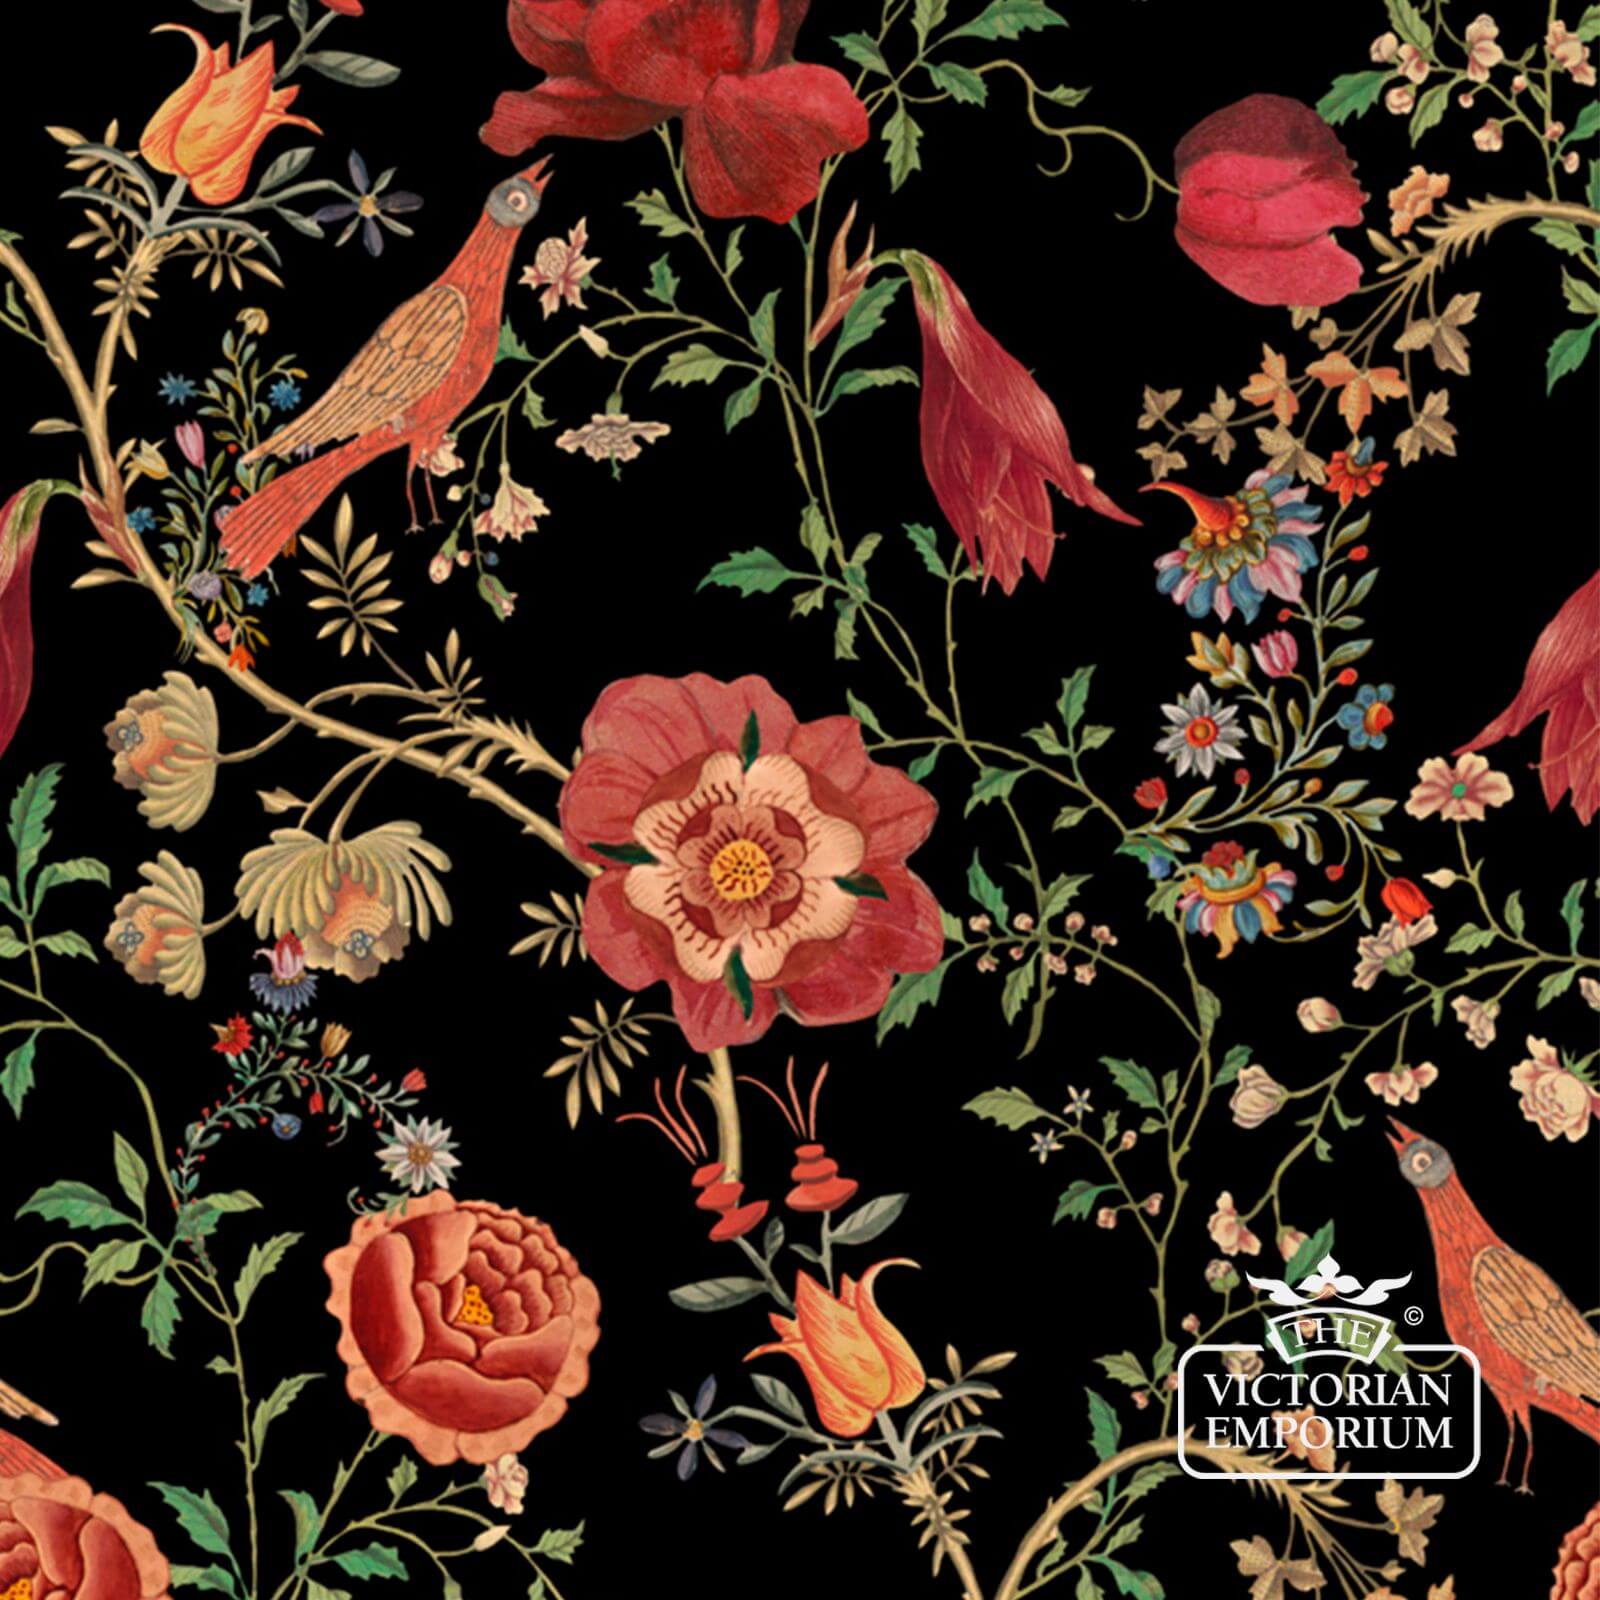 Transylvanian Flowers Wallpaper. The Victorian Emporium